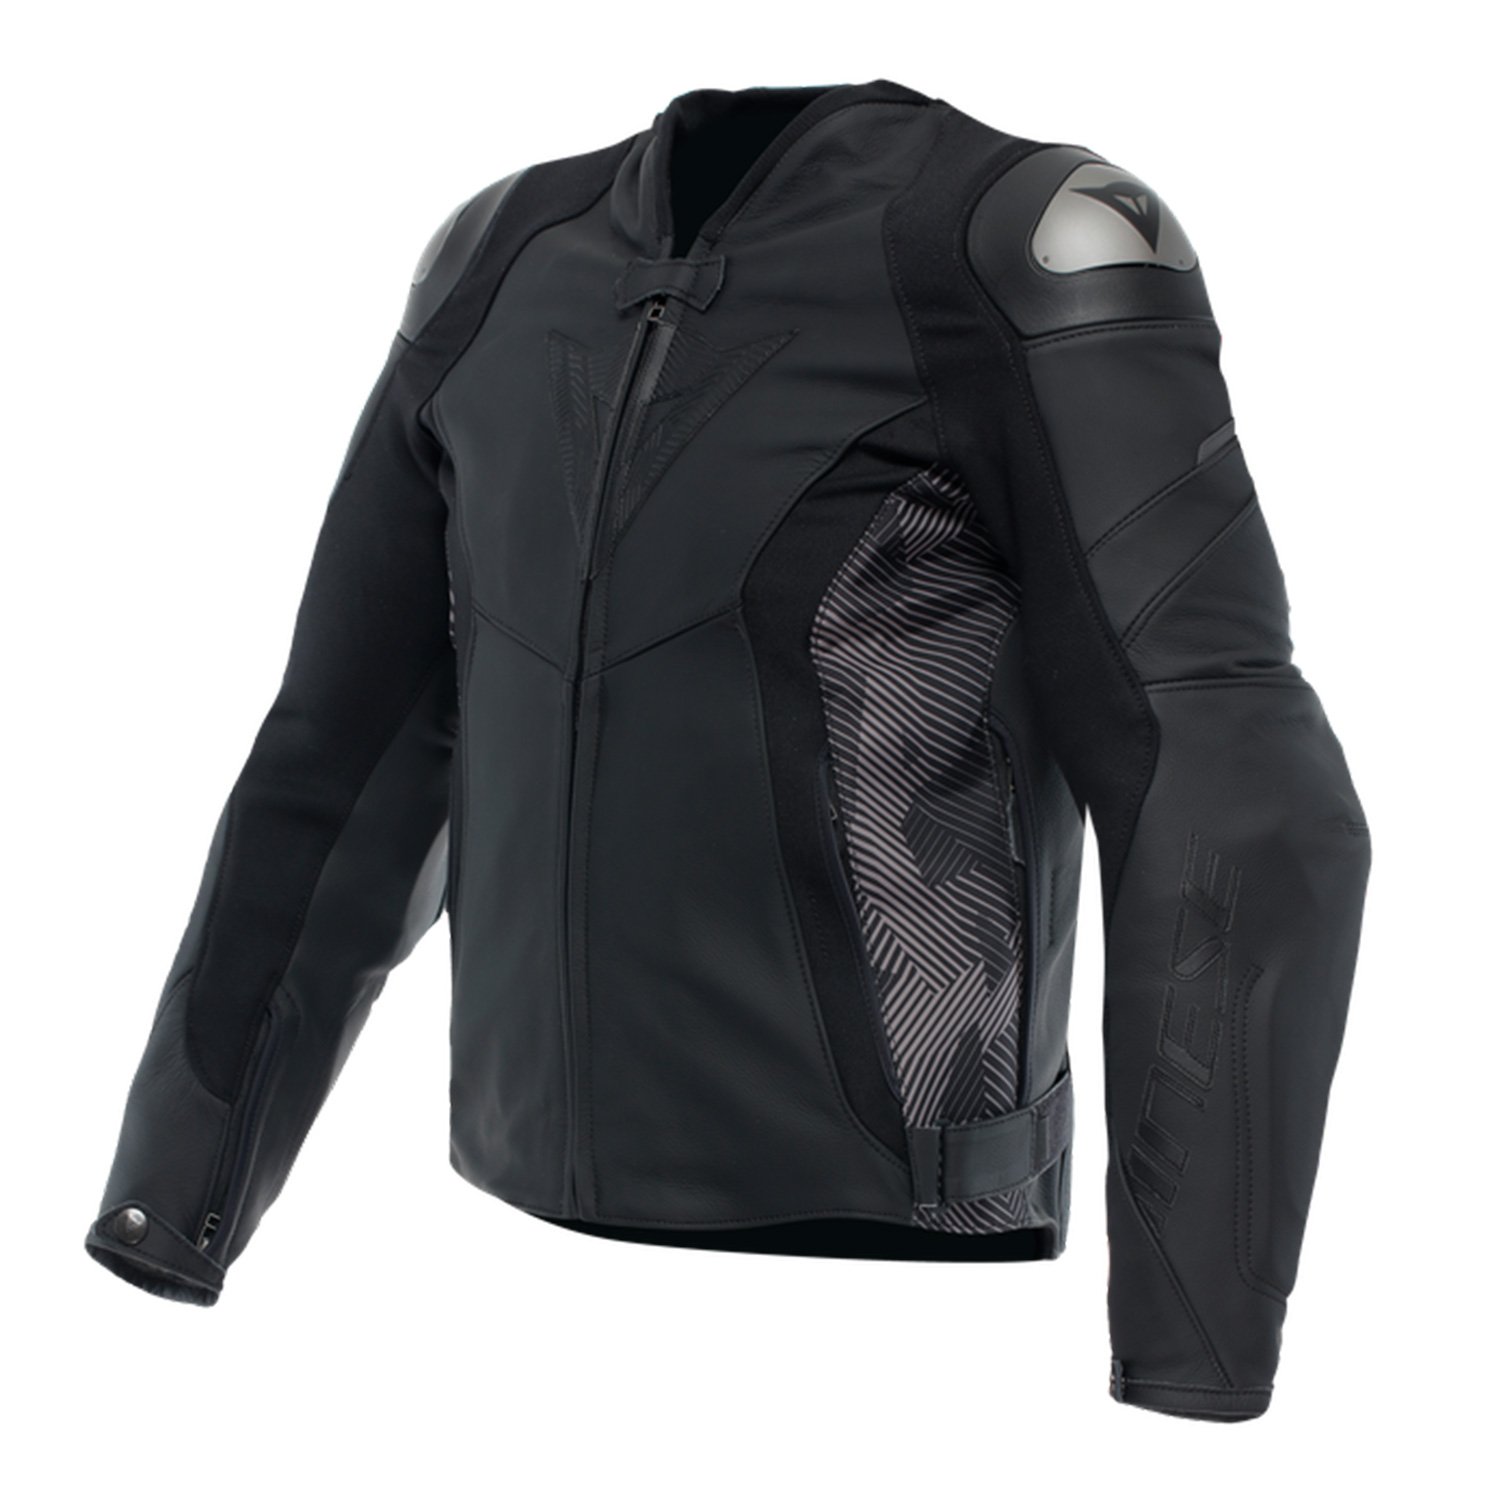 Image of Dainese Avro Leather 5 Jacket Black Anthracite Size 44 ID 8051019639493